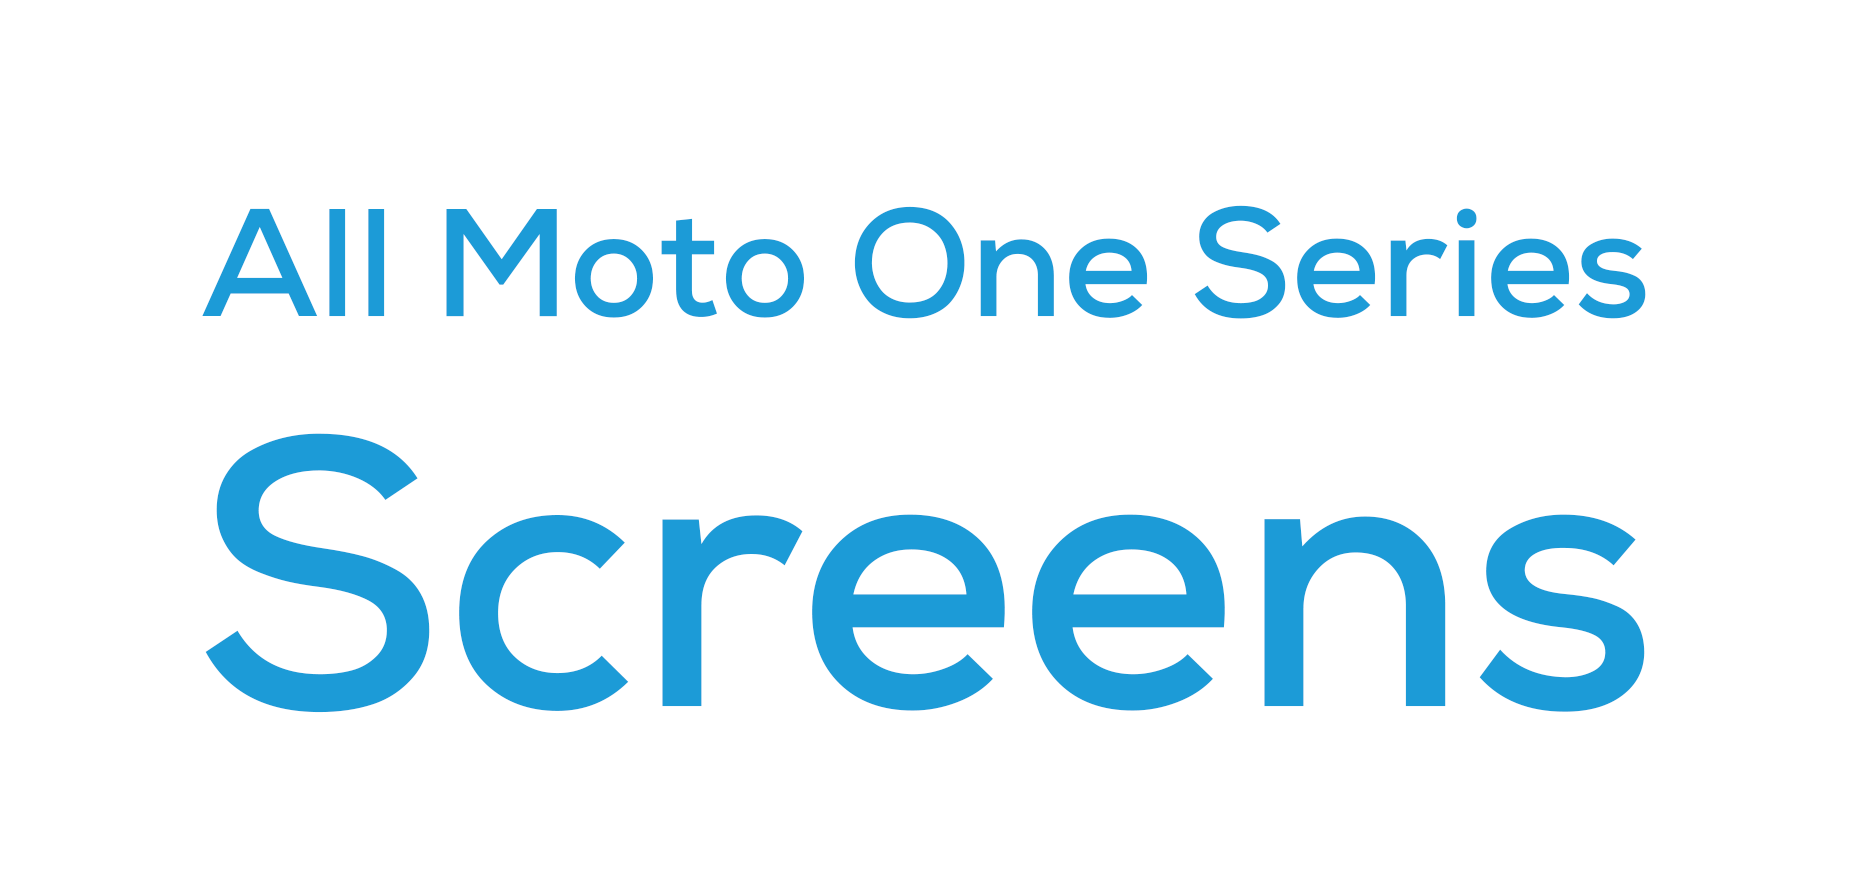 All Moto One Series Screens